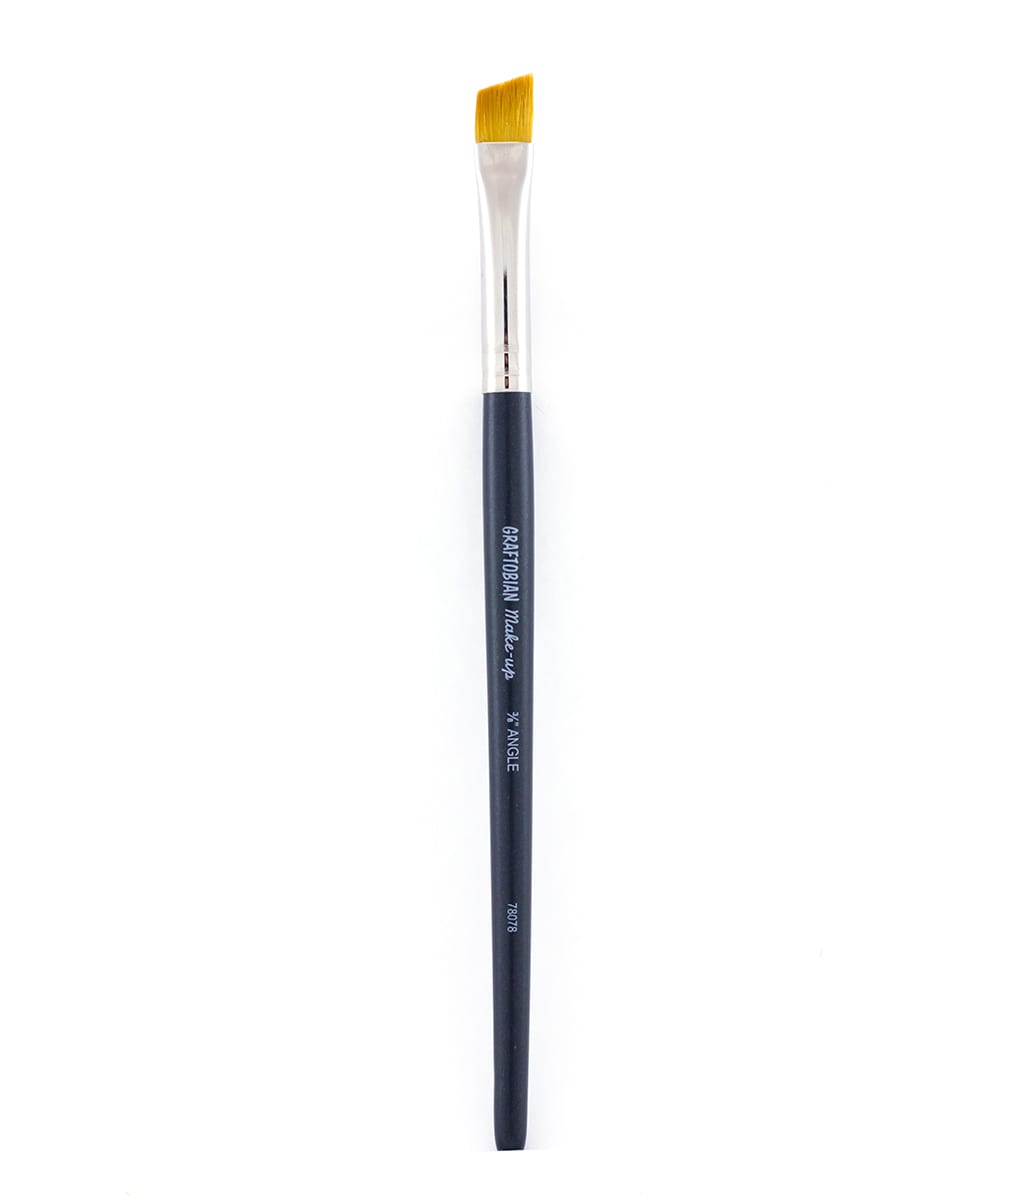 Medium Round Flat Angle Makeup Brush T38